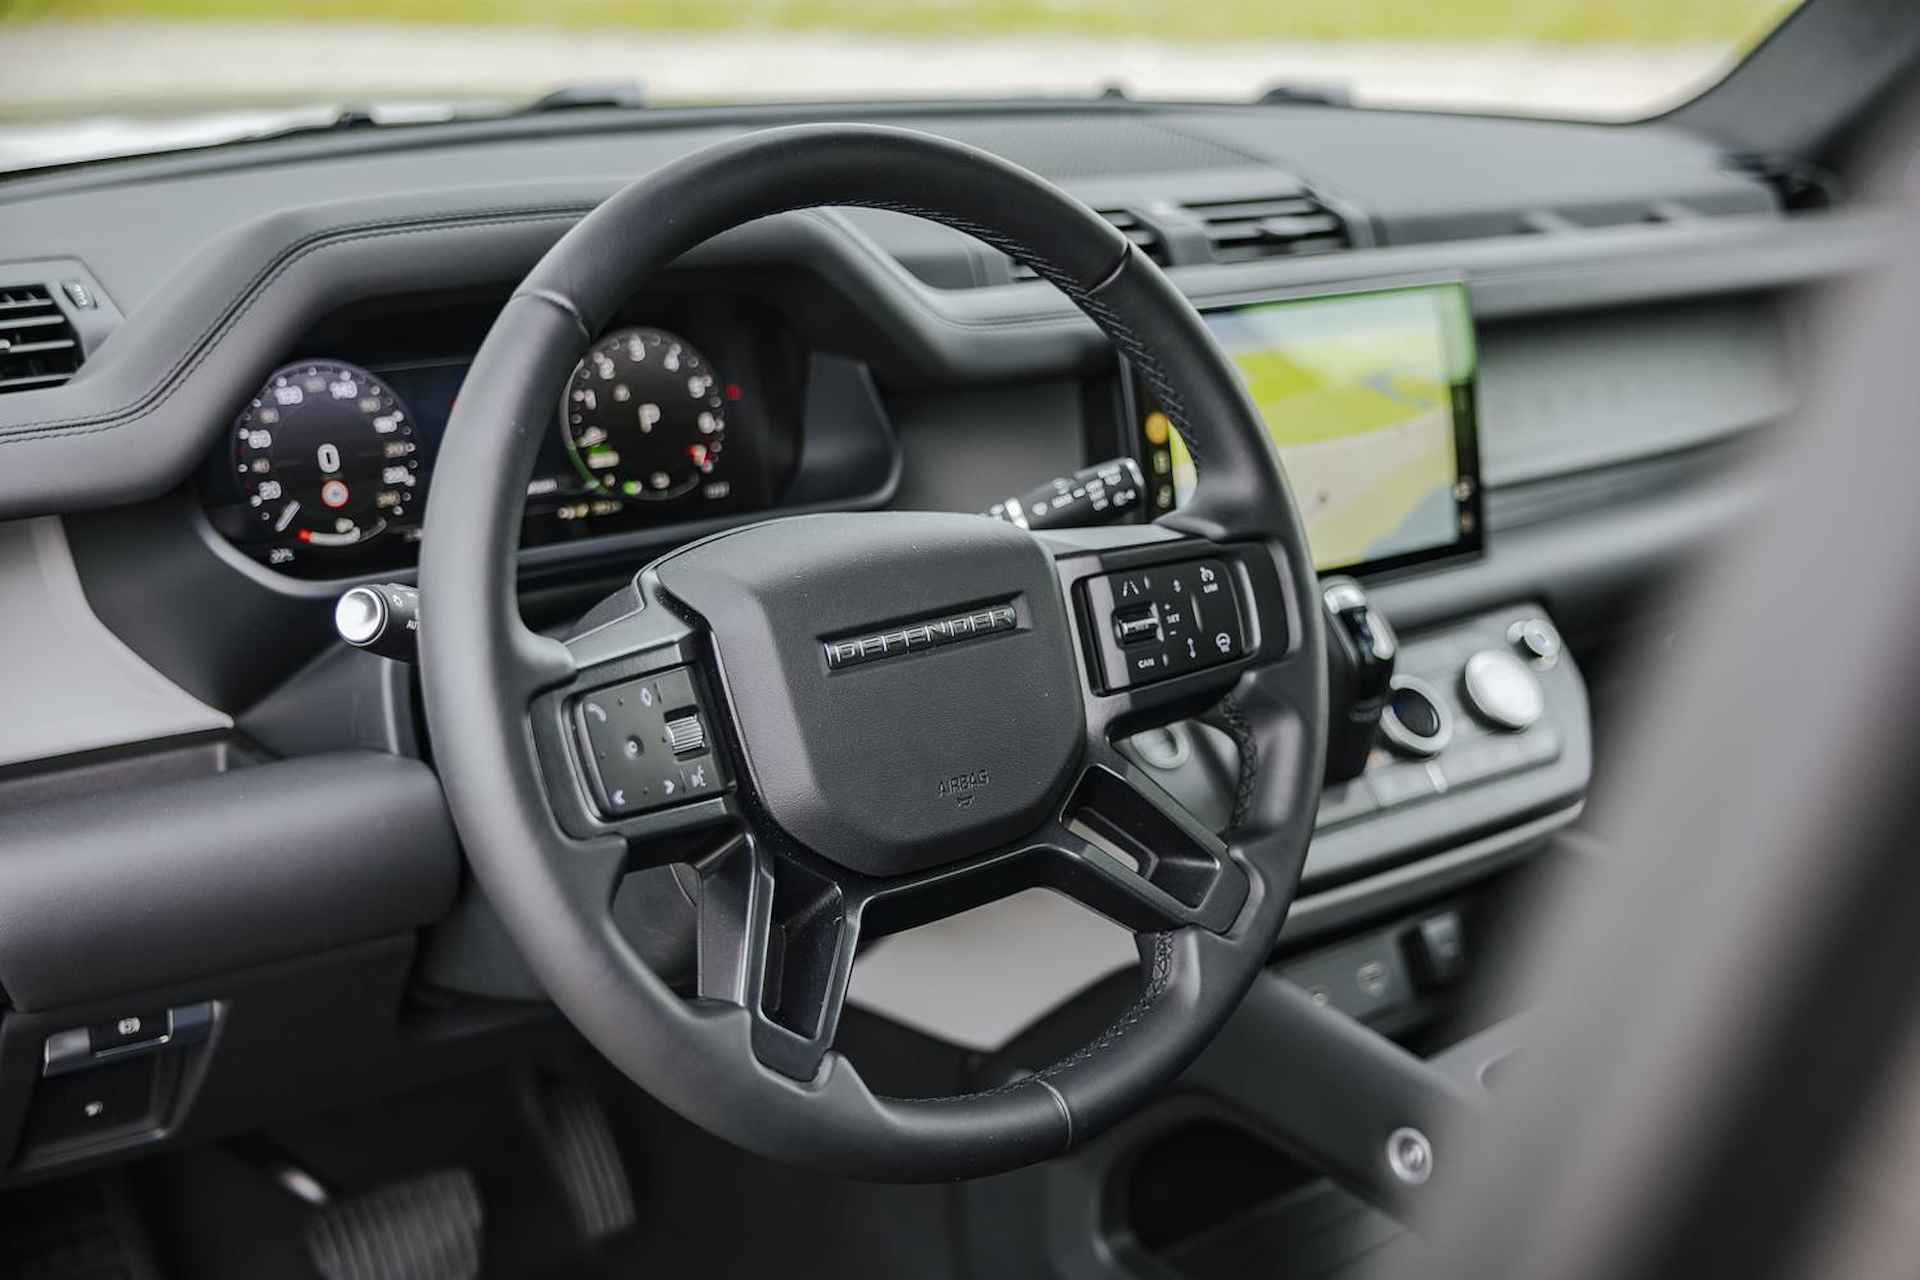 Land Rover Defender 2.0 P400e 110 X-Dynamic HSE | Panoramadak | 22" Velgen in Gloss Black | 11,4" Touch Screen | Cold Climate Pack | Elektrische Trekhaak | Expedition imperiaal | Uitklapbare Dakladder| All Season Banden - 28/43